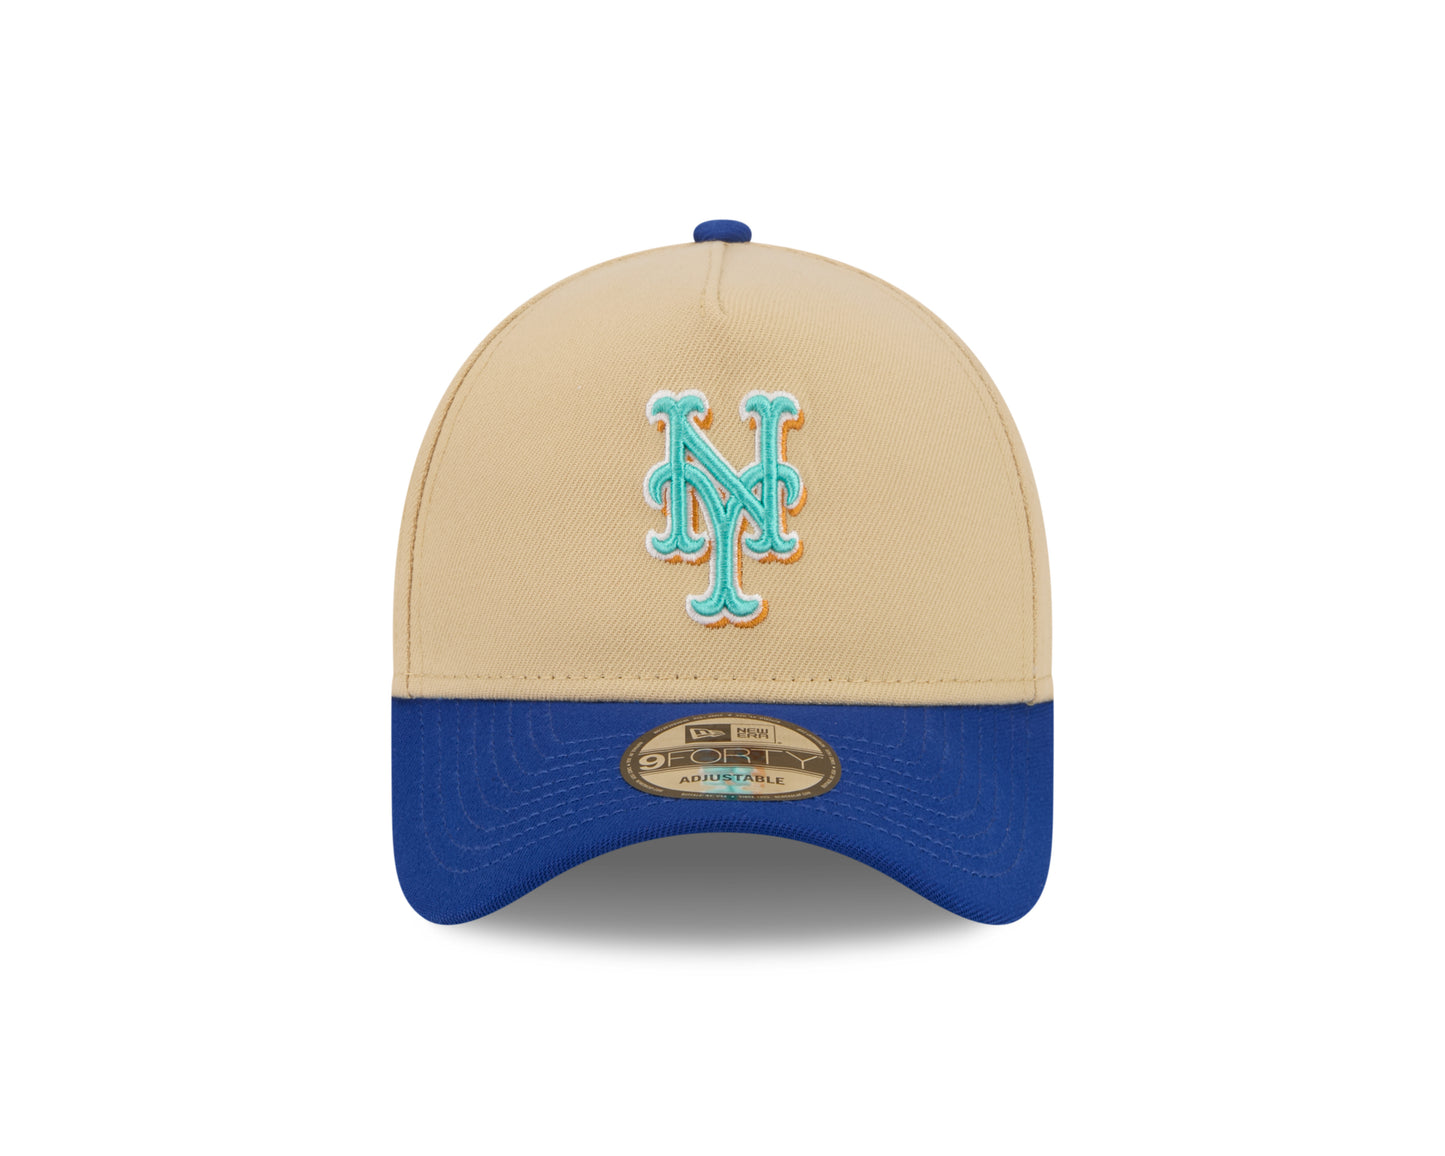 New Era - New York Mets - City Side Patch - 9forty A-Frame Cap - Light Beige - Headz Up 